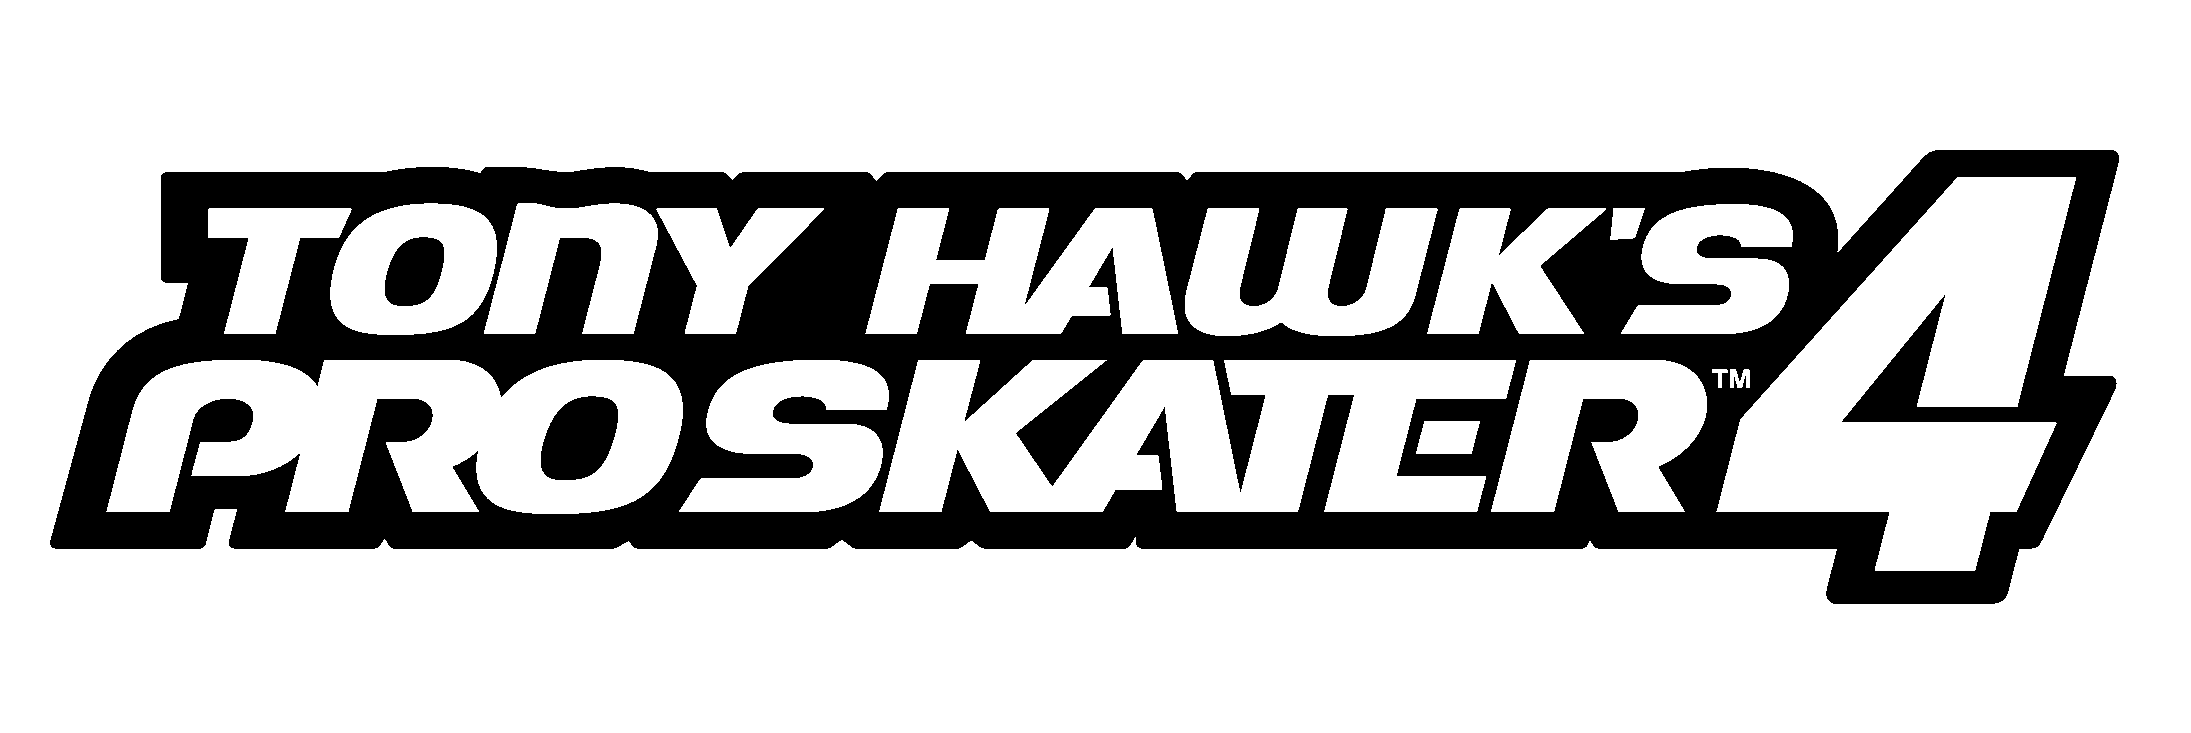 Tony Hawk’s Pro Skater 4 Logo PNG